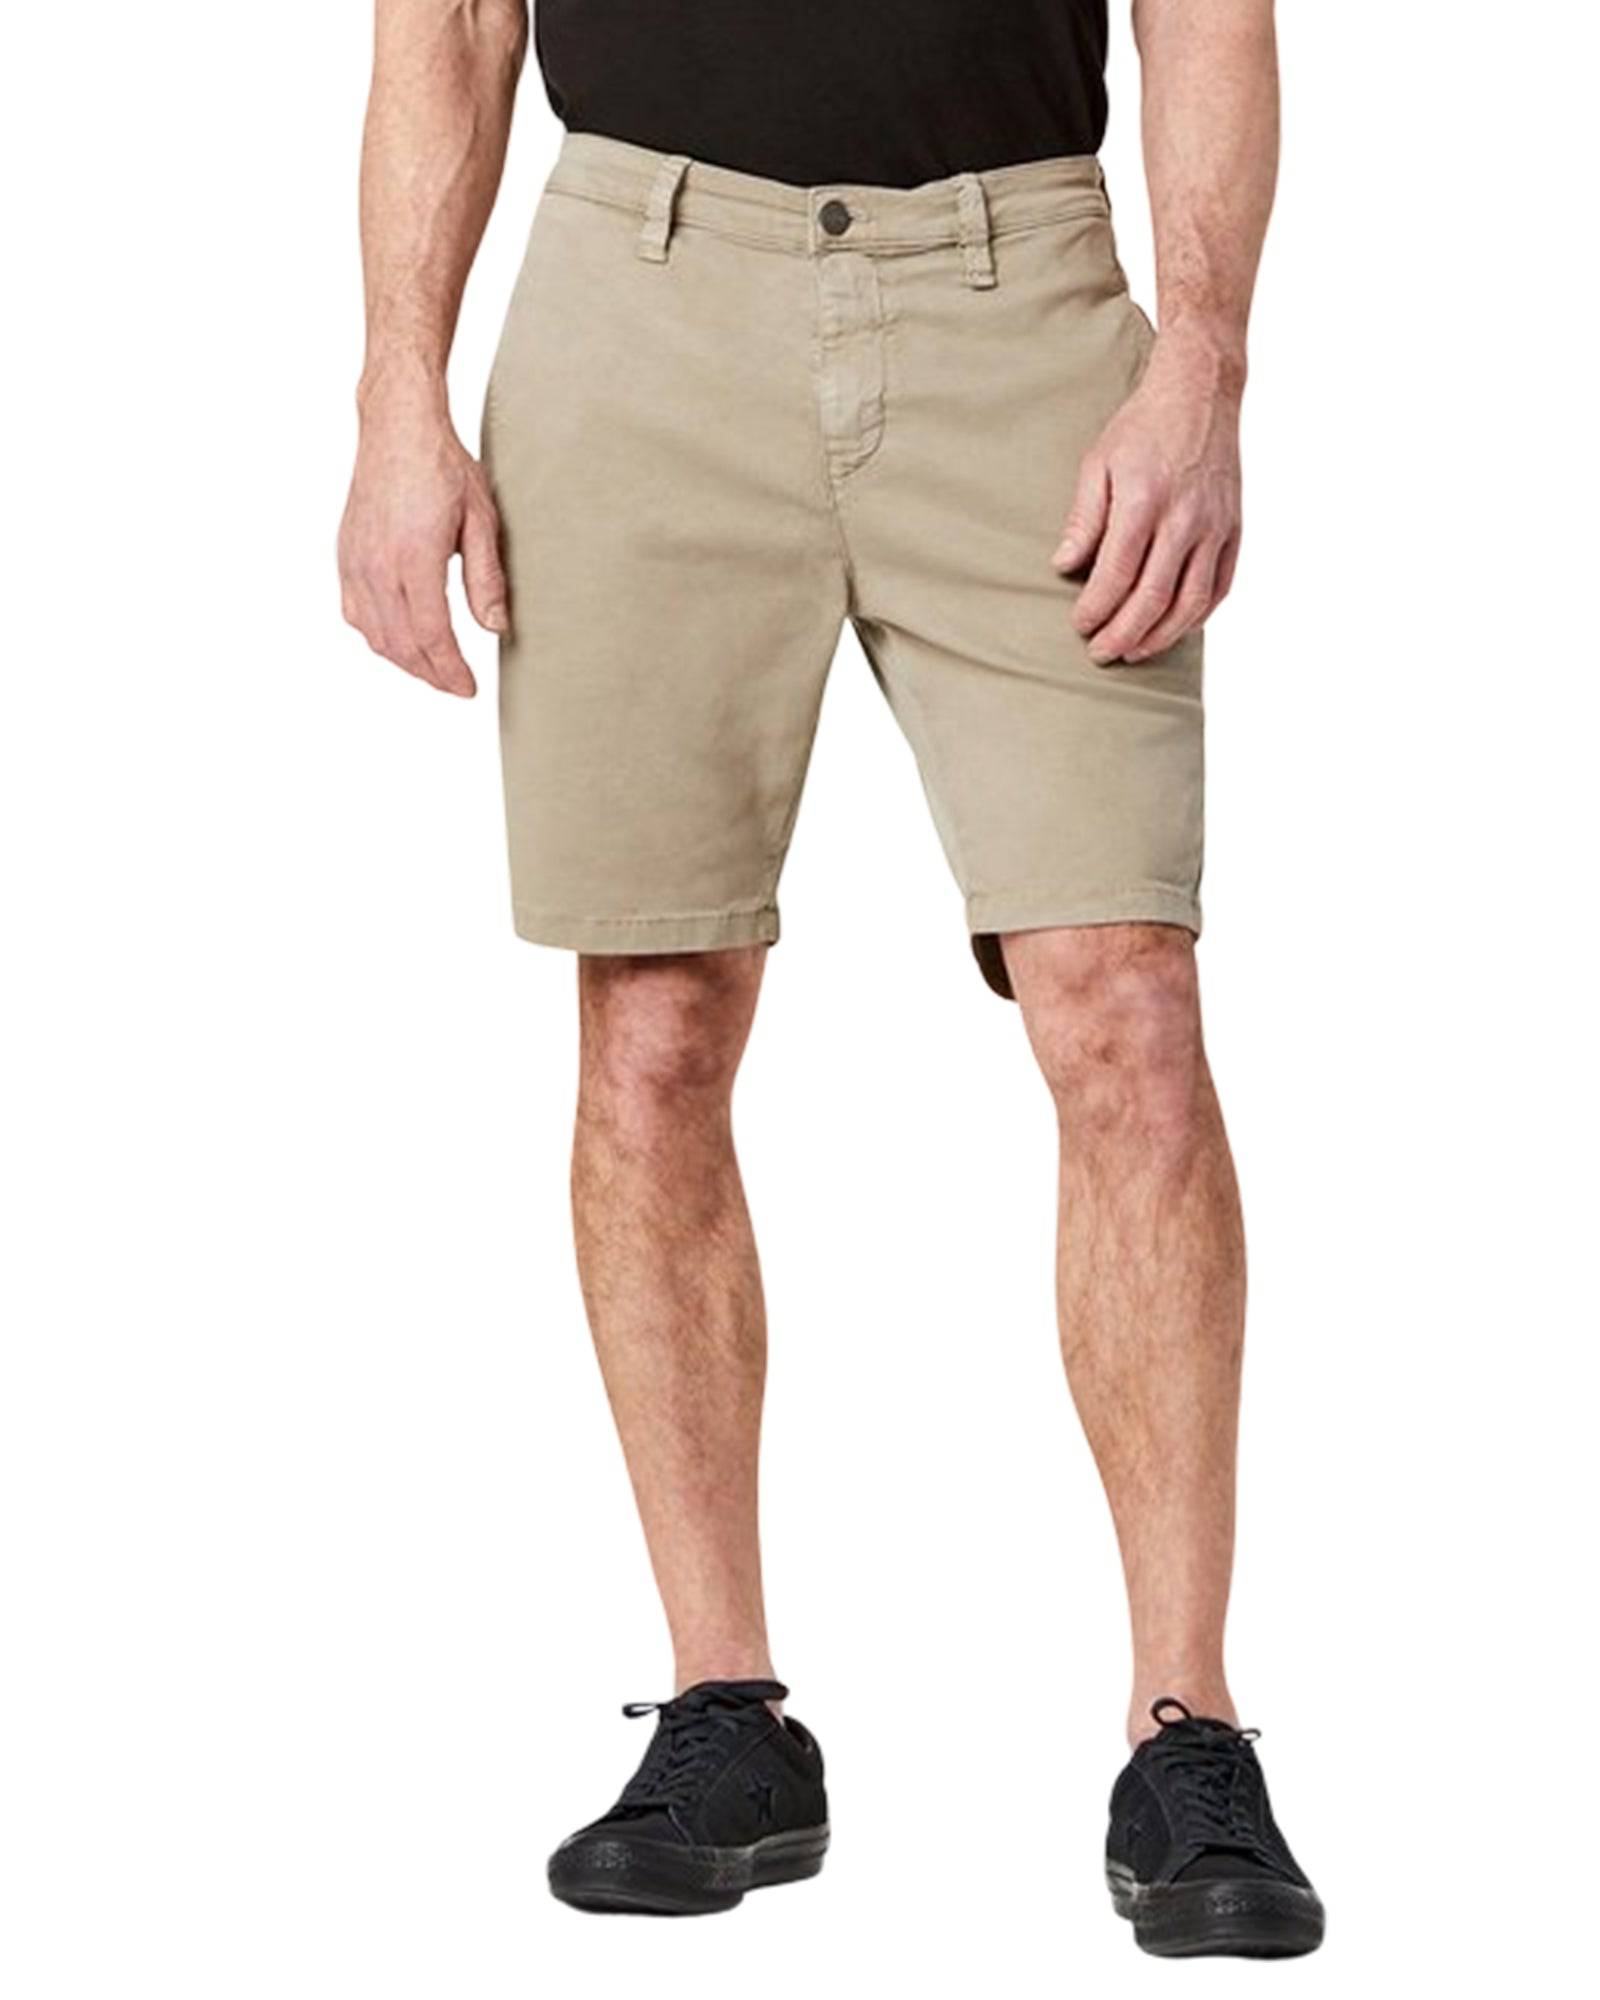 34 Heritage Mushroom Soft Touch Nevada Cotton Tencel Shorts - Rainwater's Men's Clothing and Tuxedo Rental